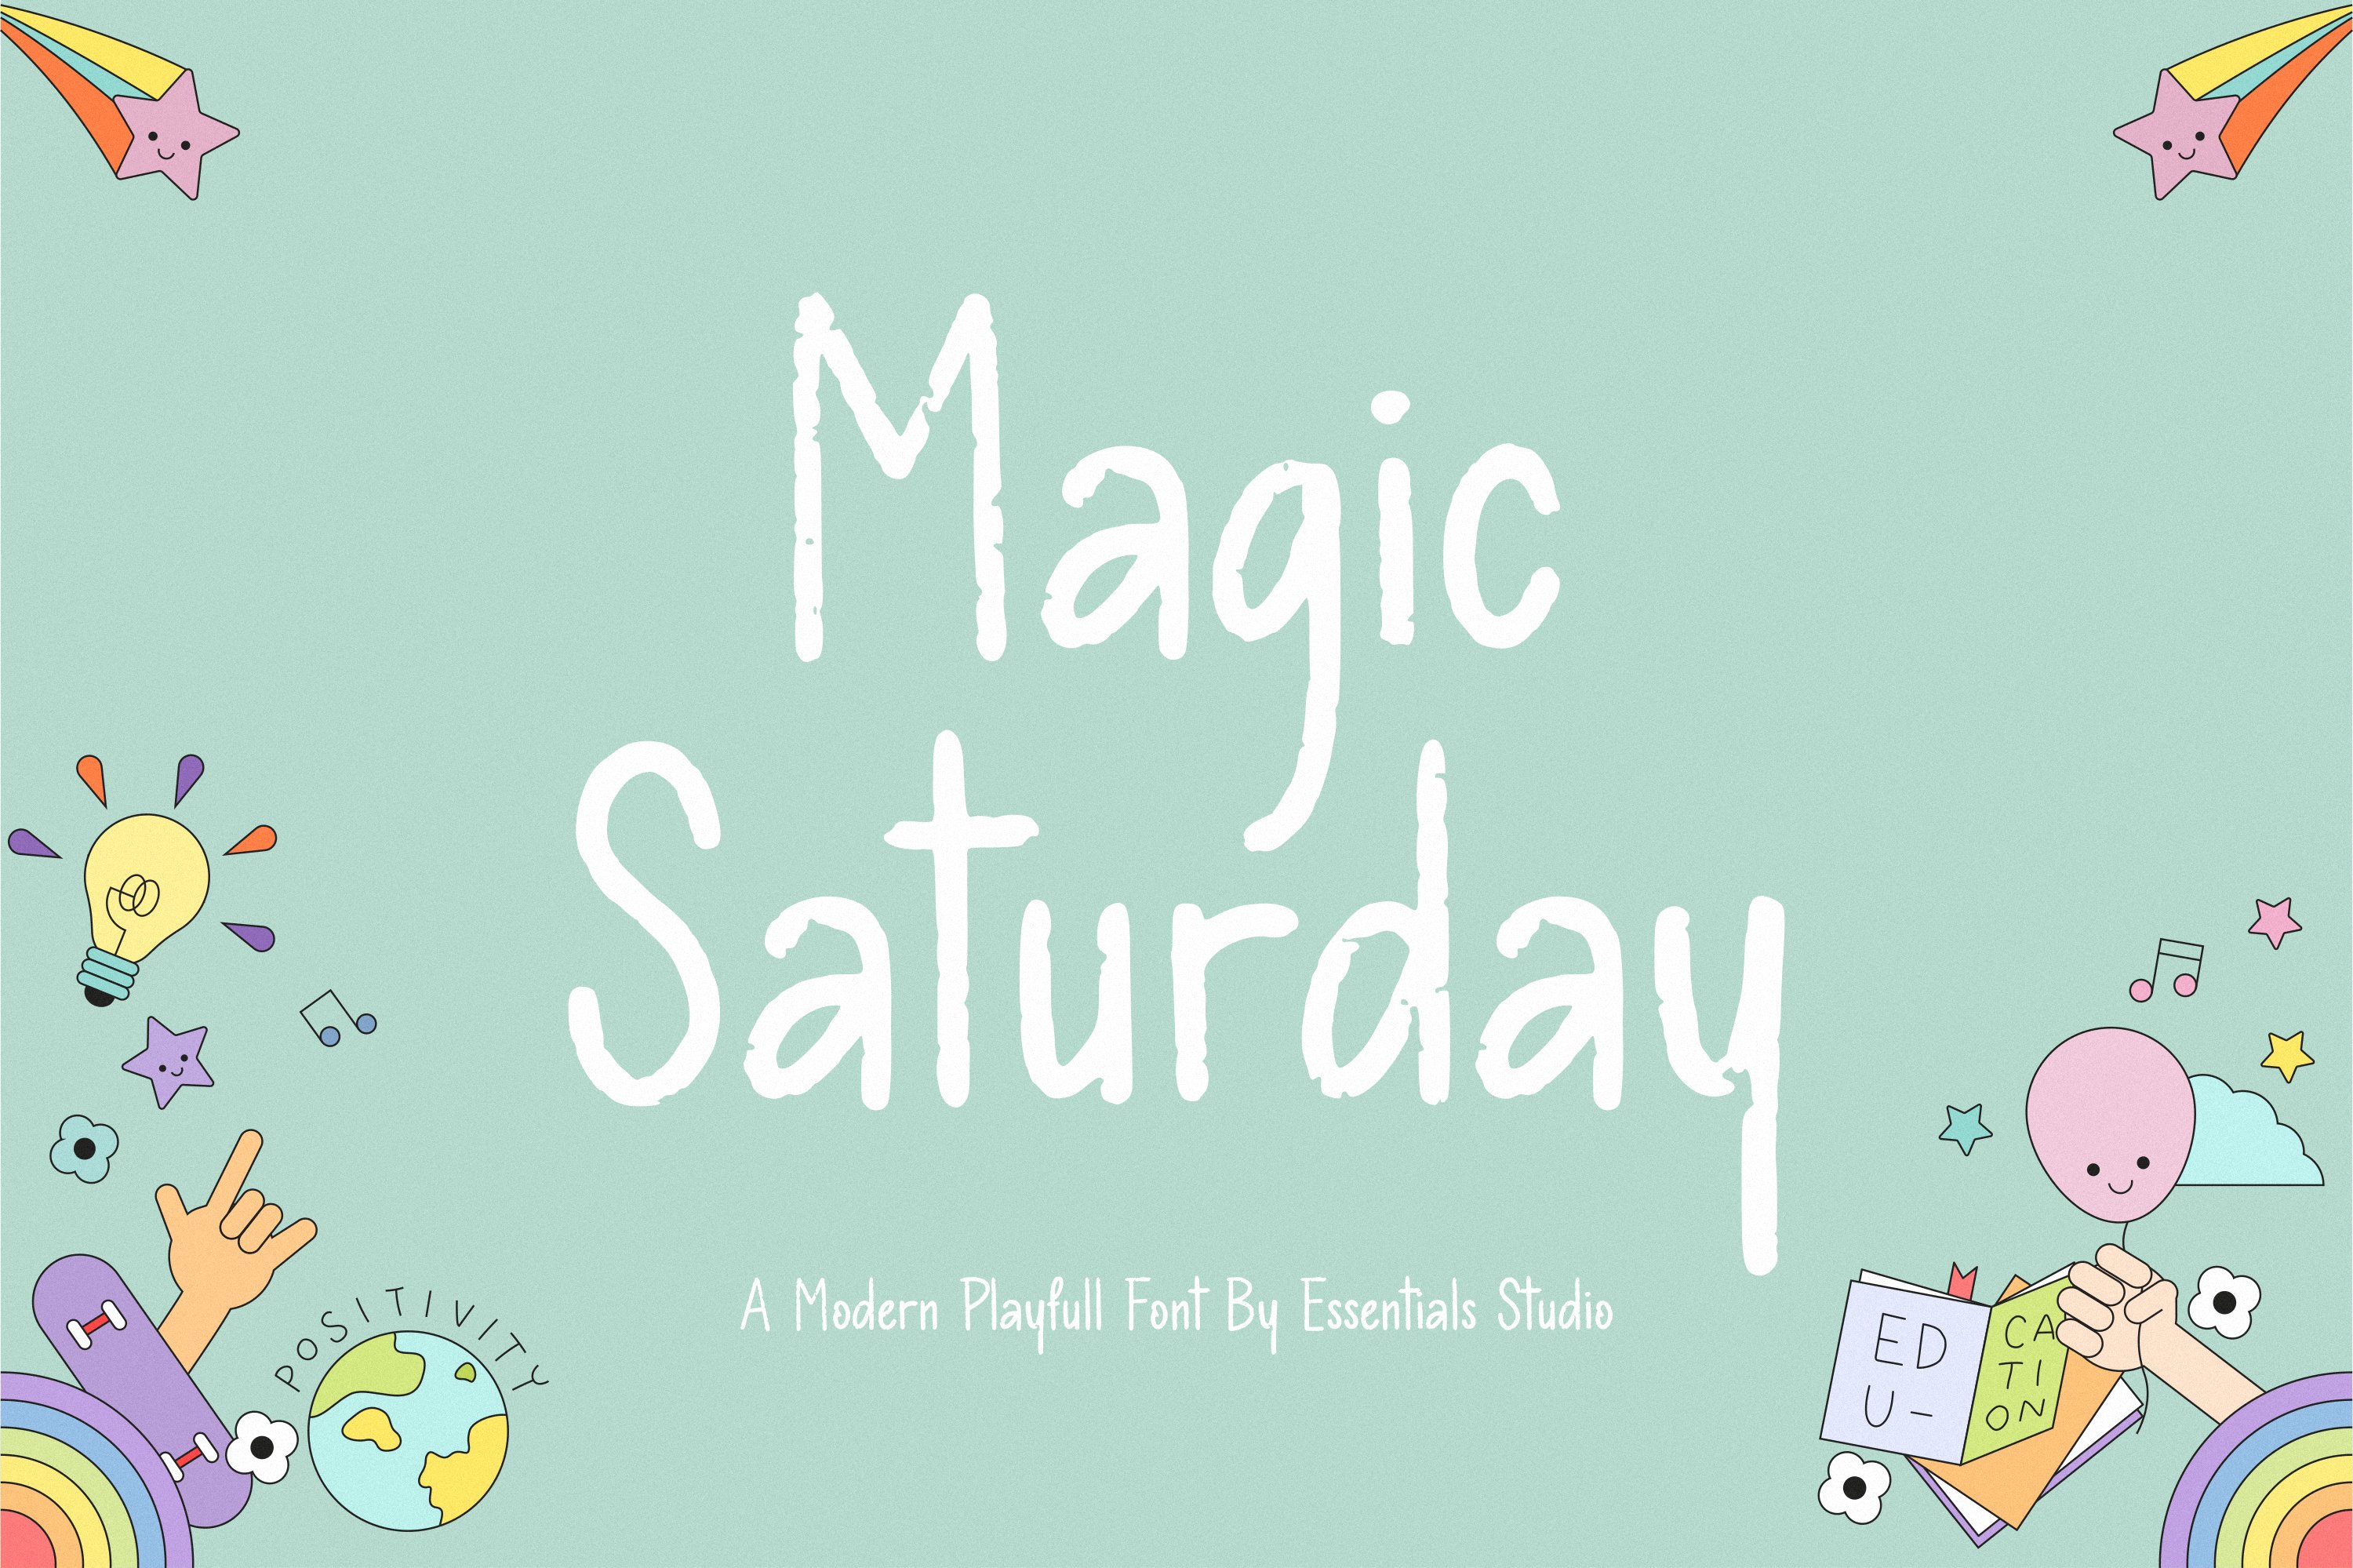 Magic Saturday cover image.